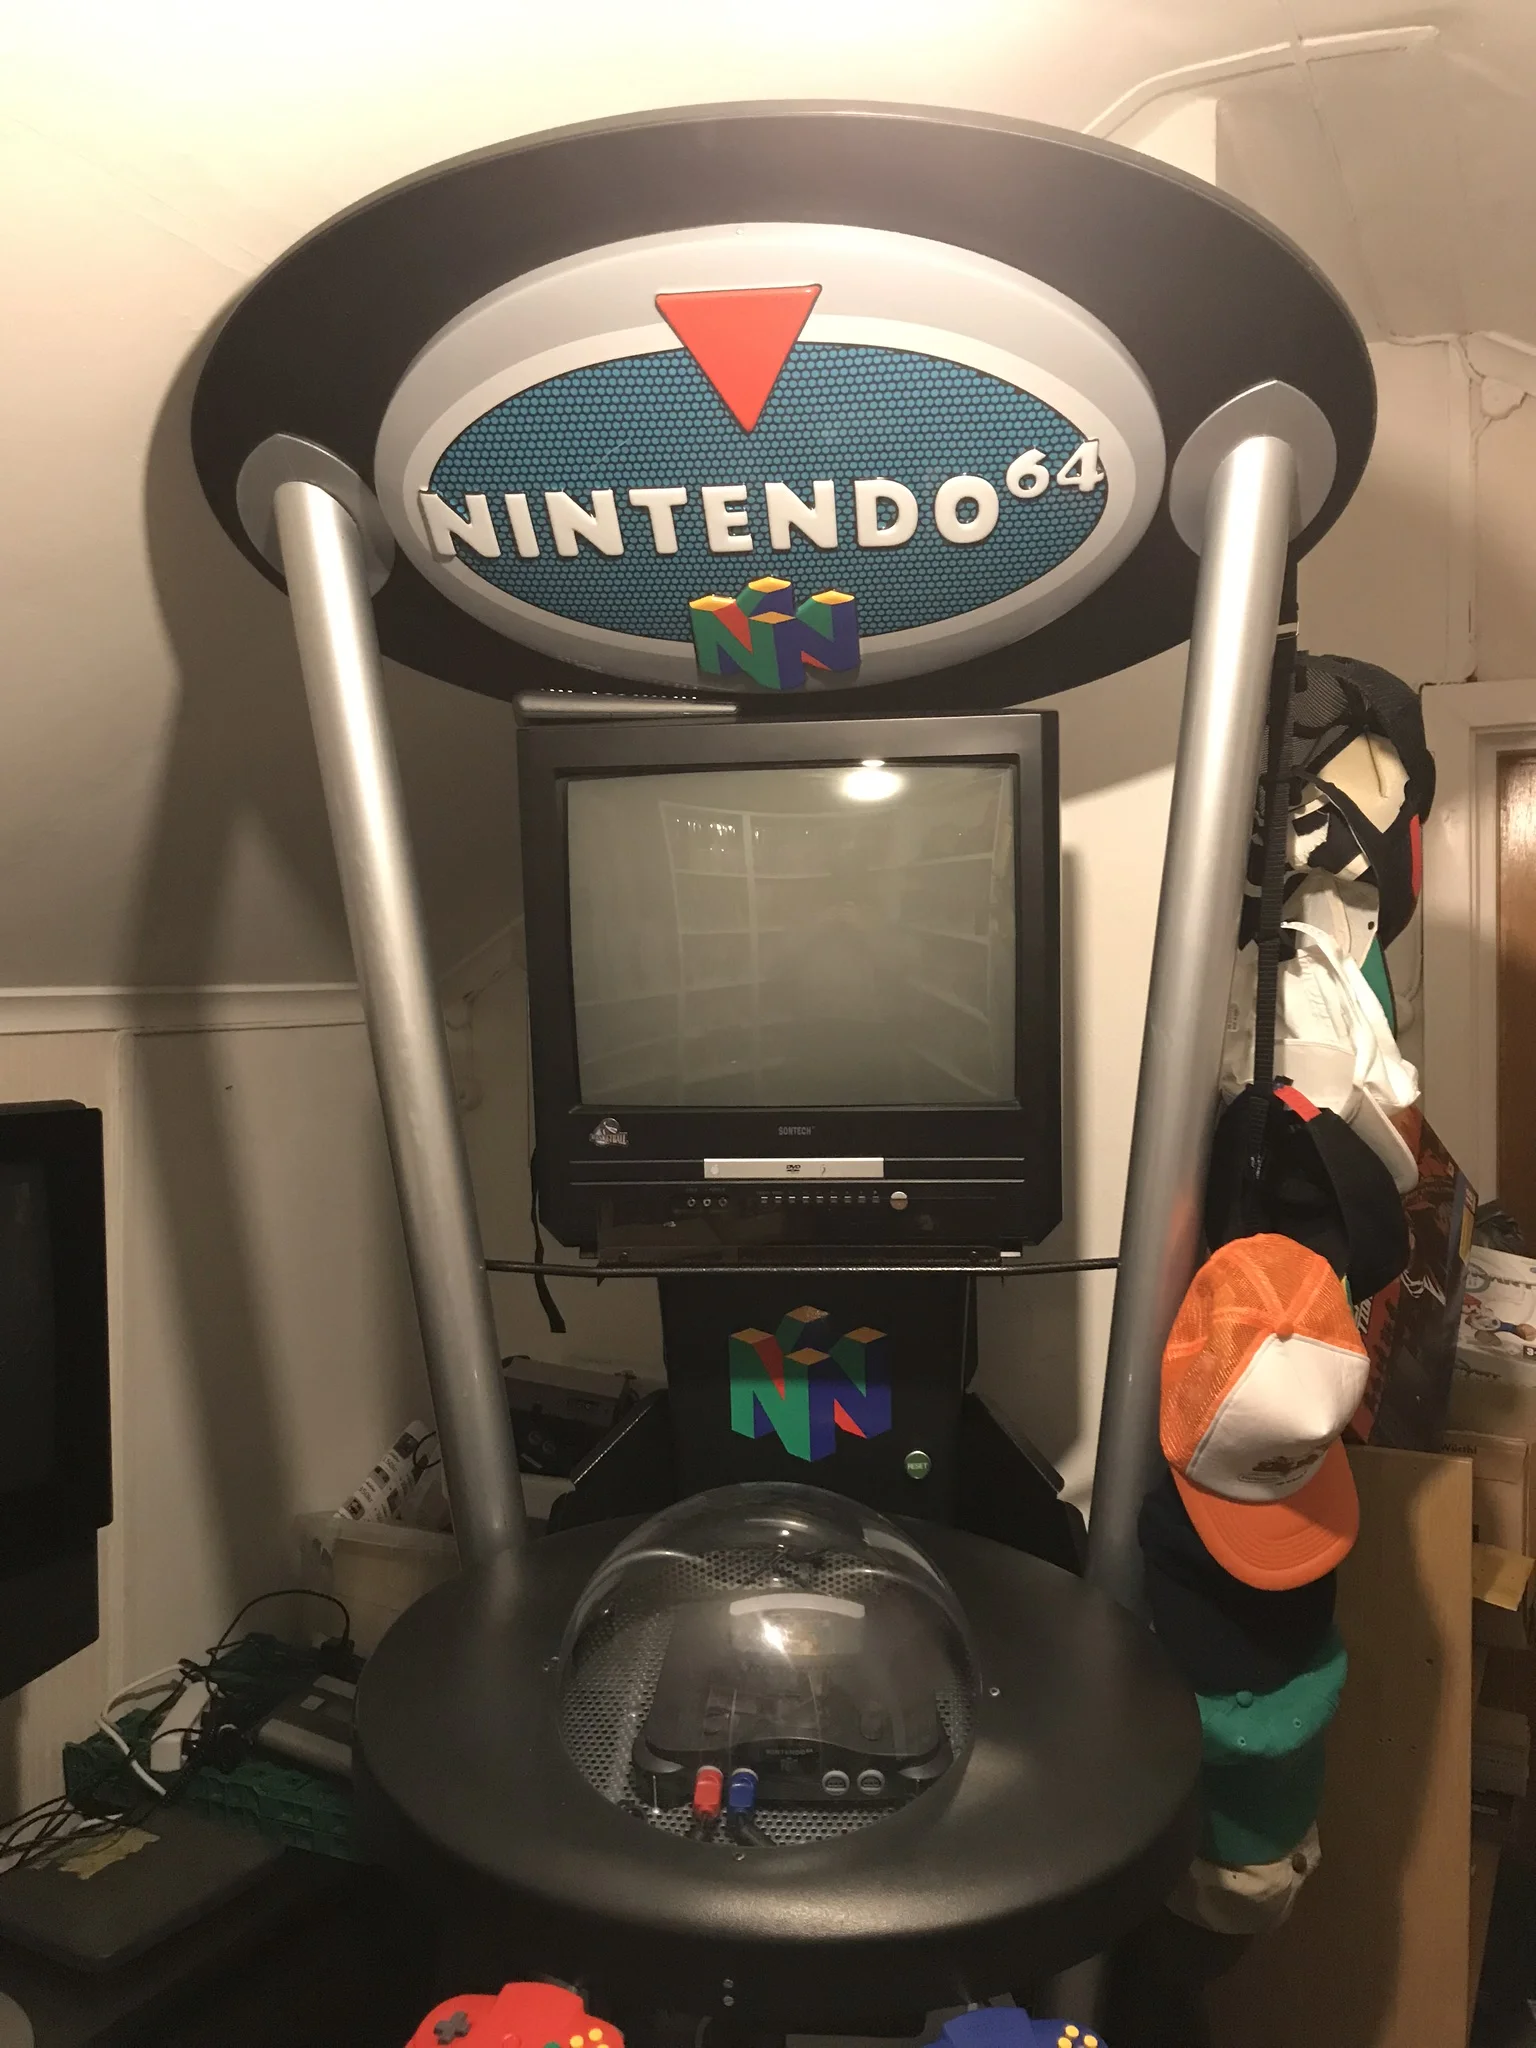  Nintendo 64 Kiosk [EU]